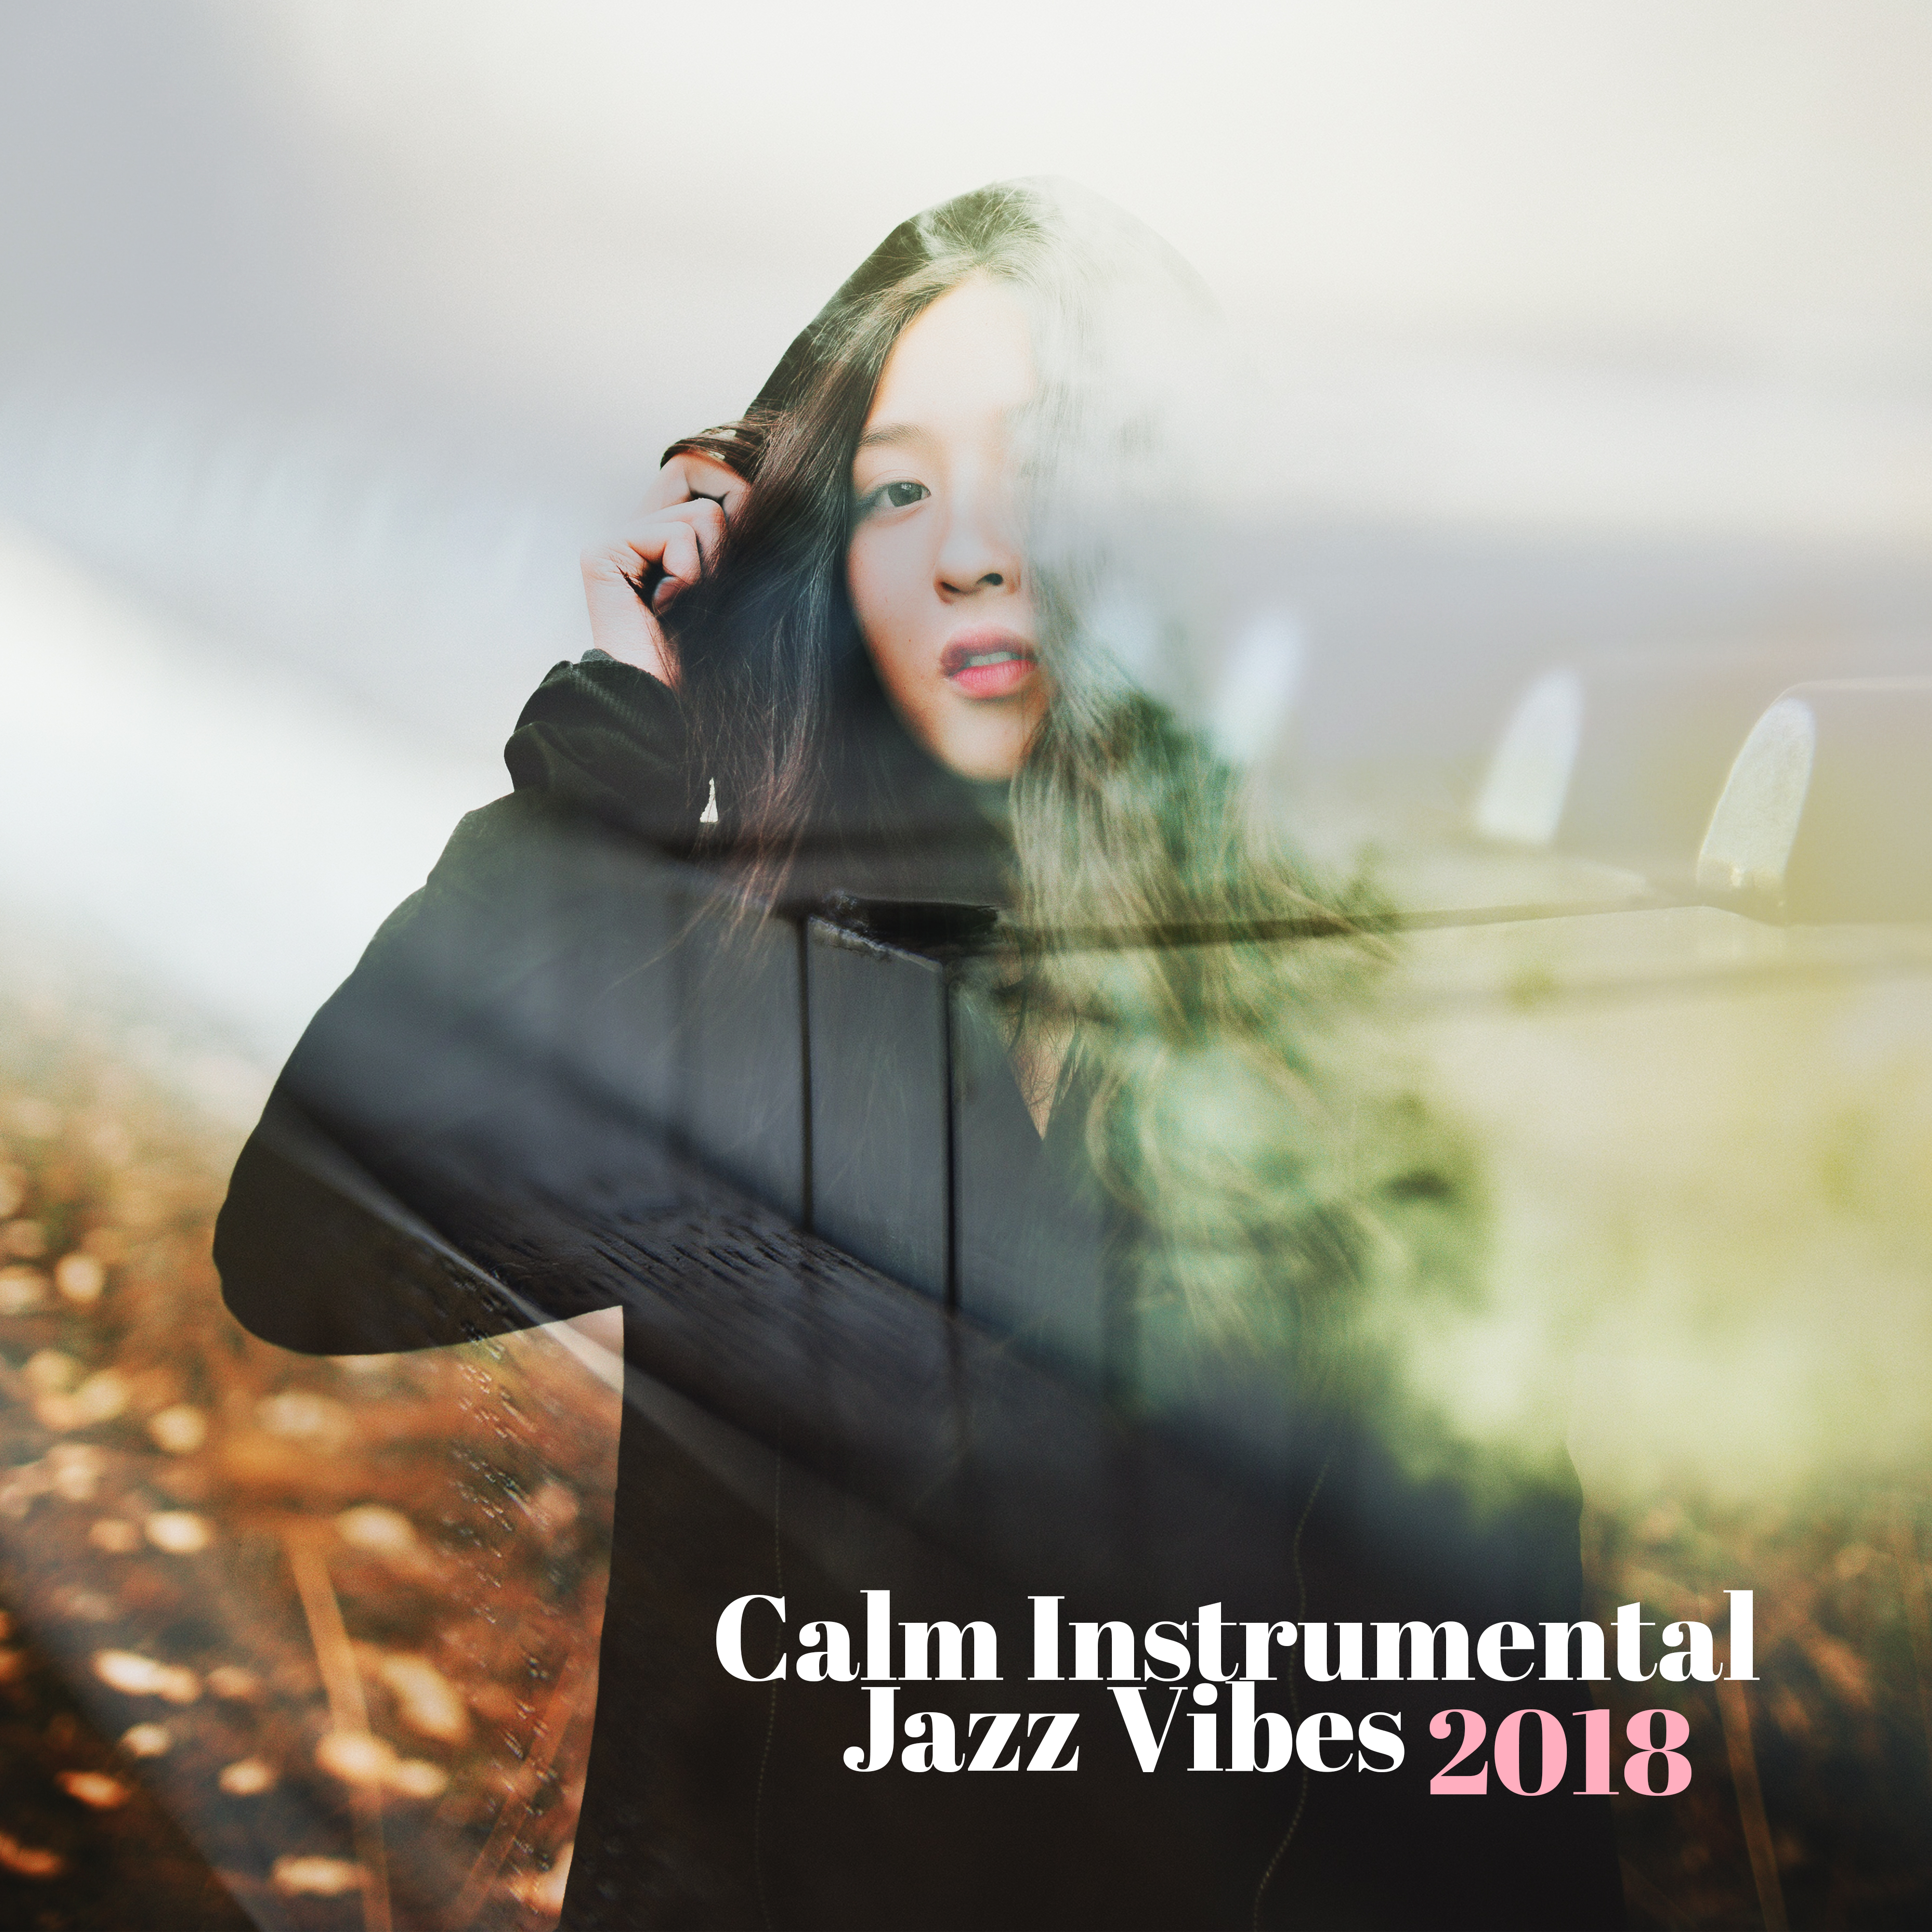 Calm Instrumental Jazz Vibes 2018